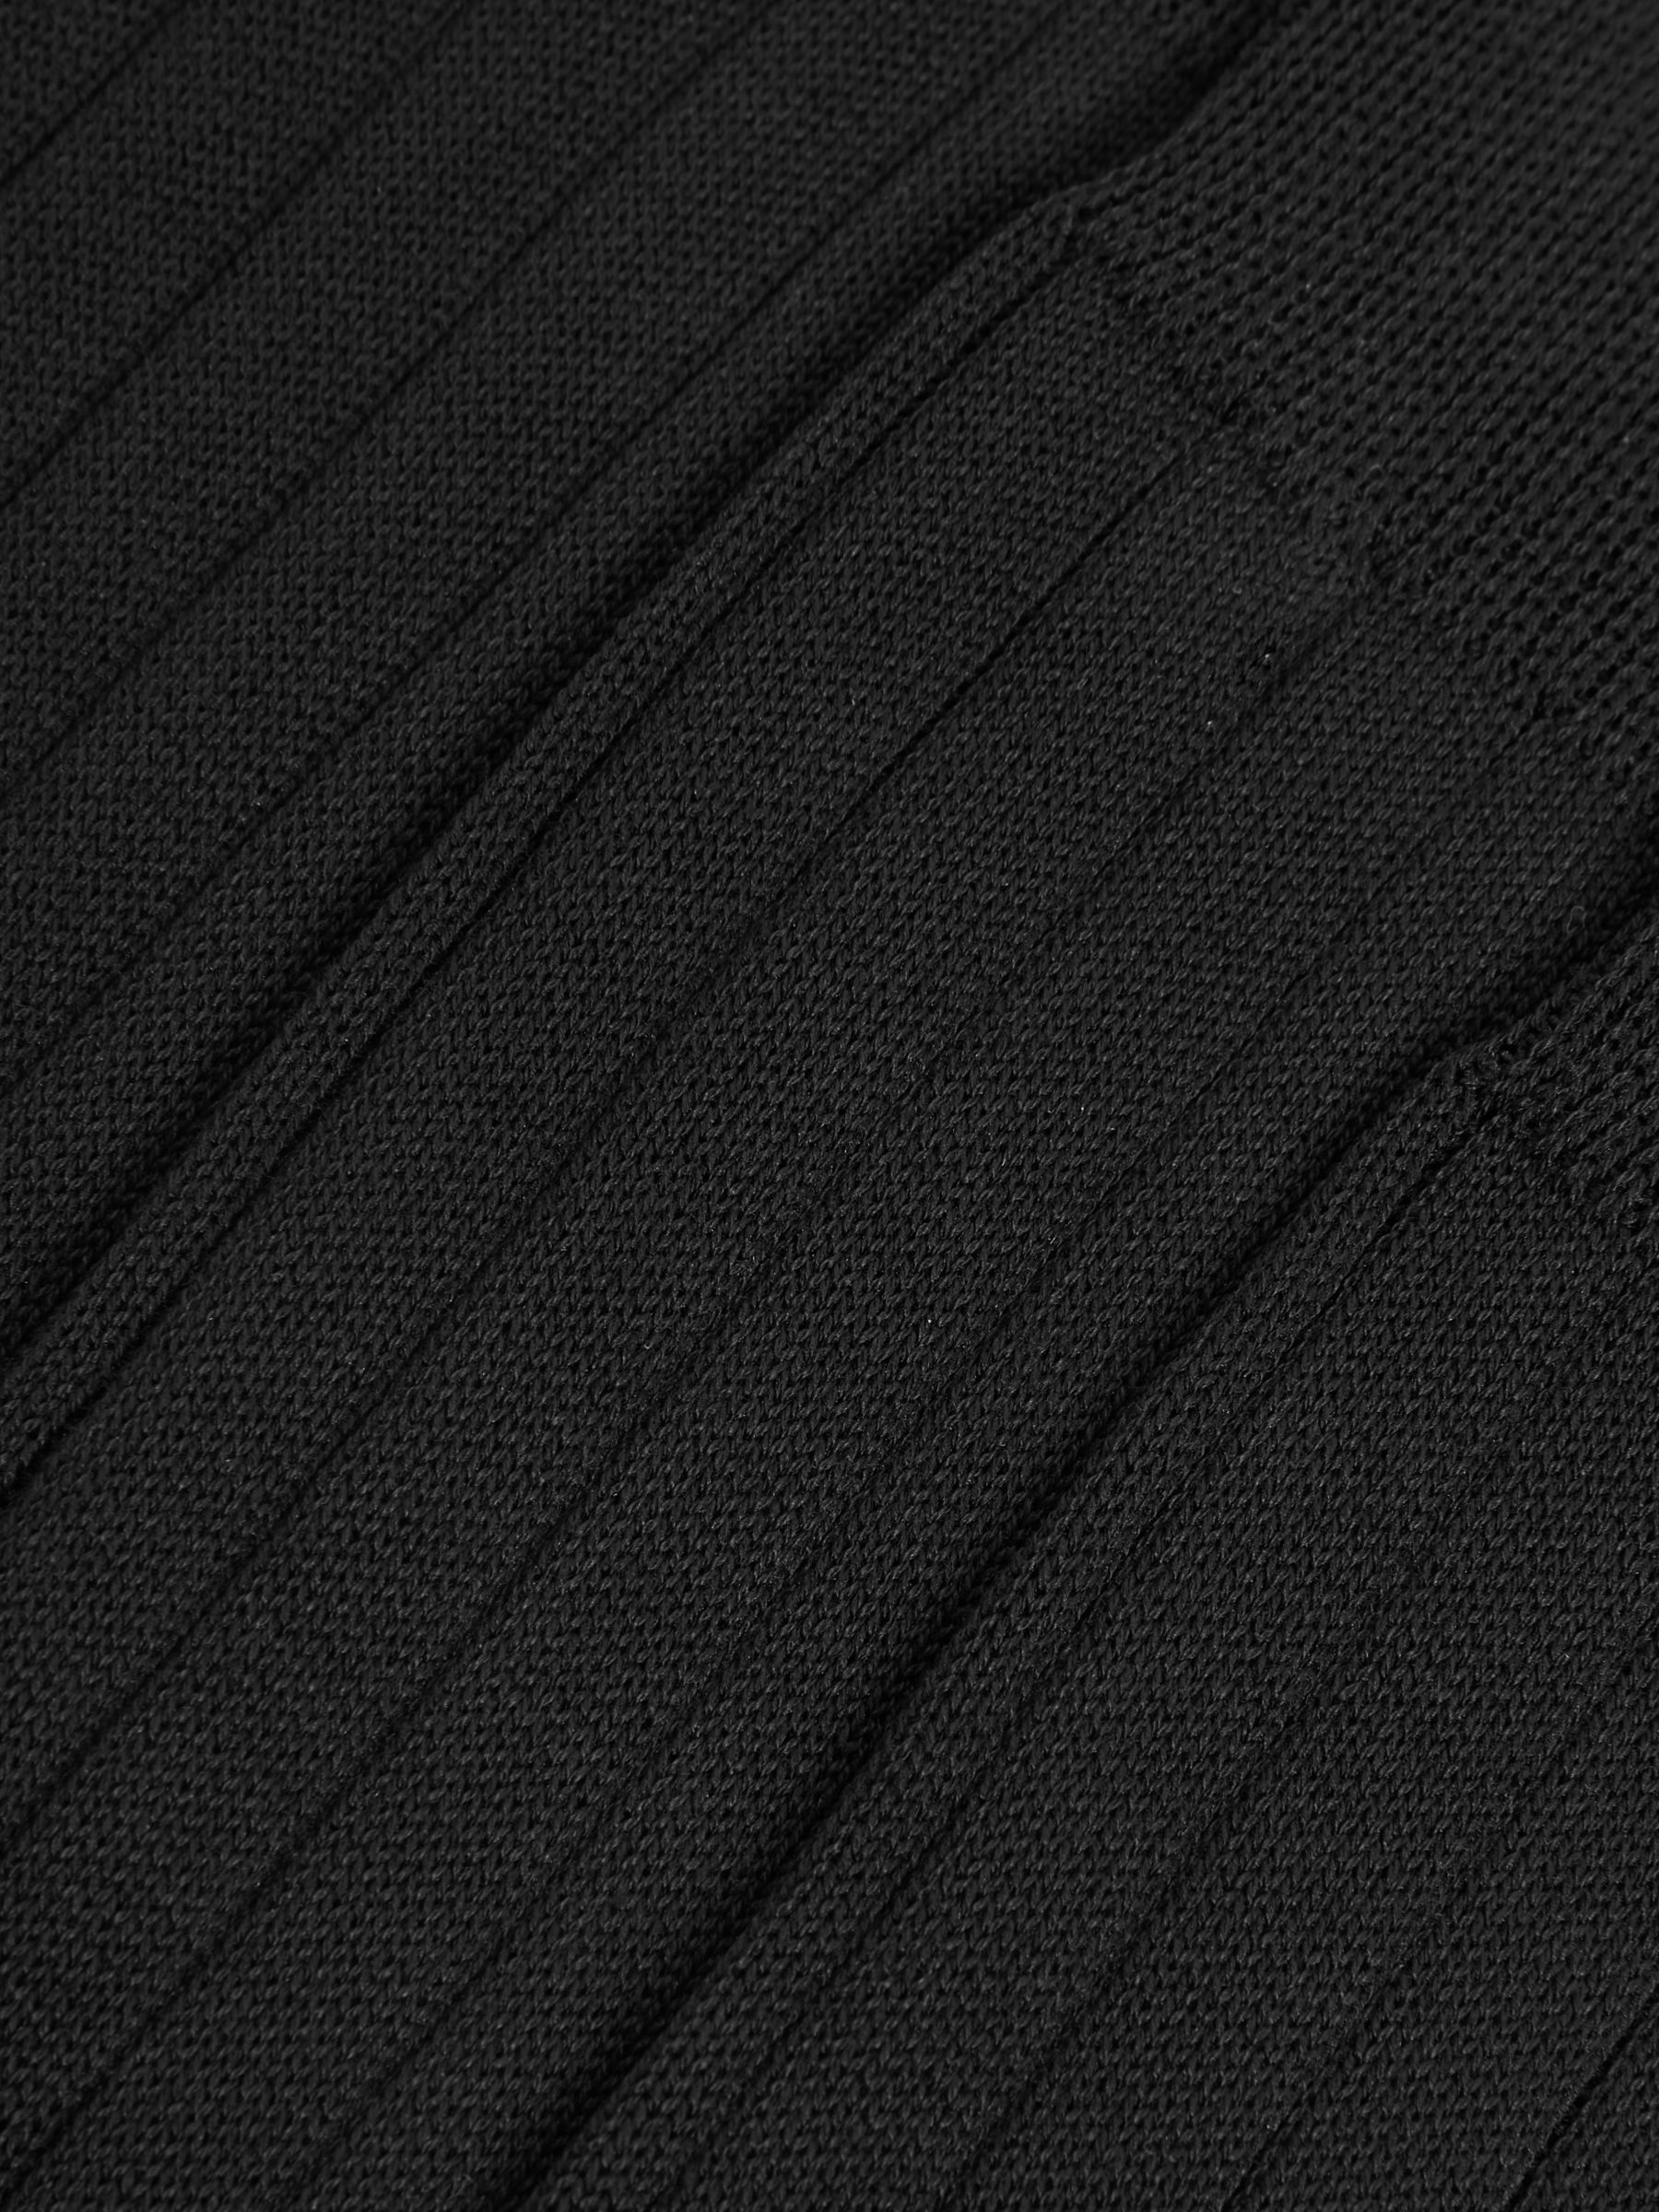 John Lewis Made in Italy Mercerised Cotton Socks, Pack of 3, Black, S